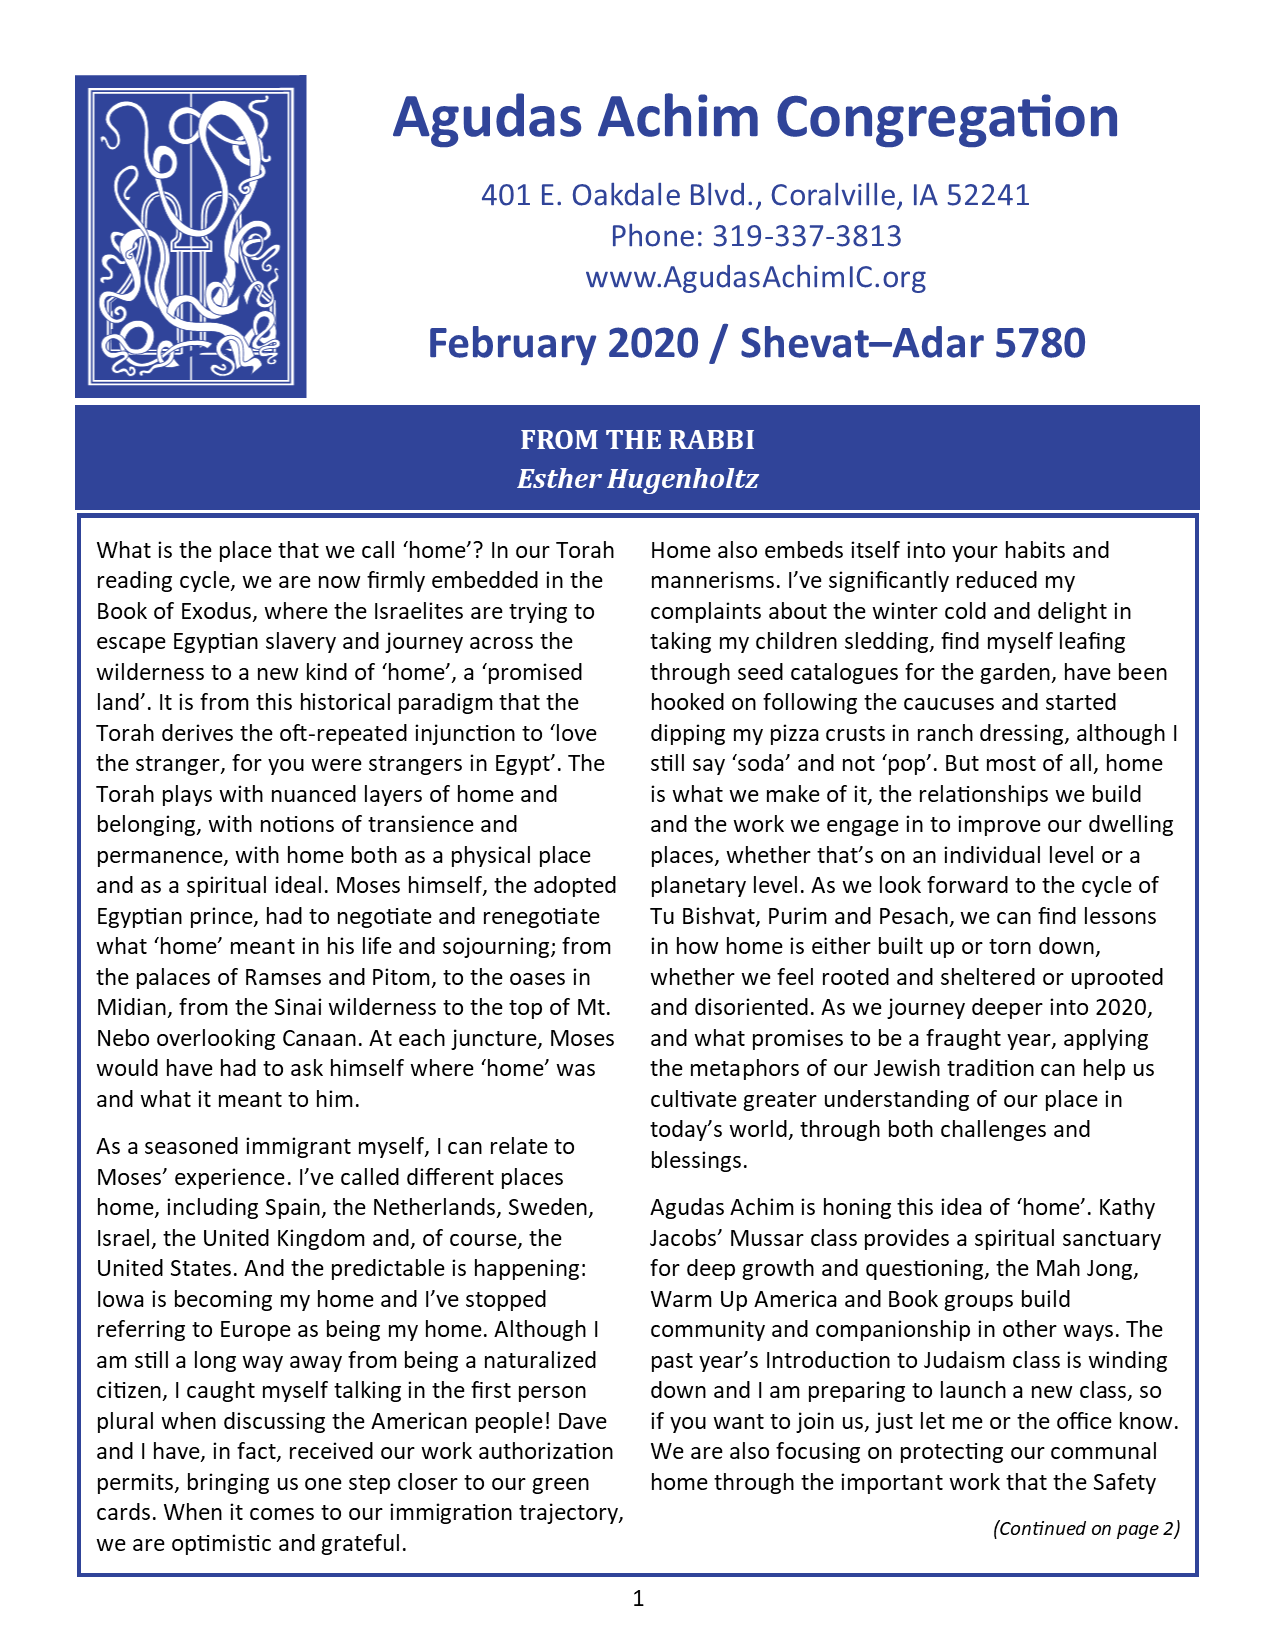 February 2020 Bulletin